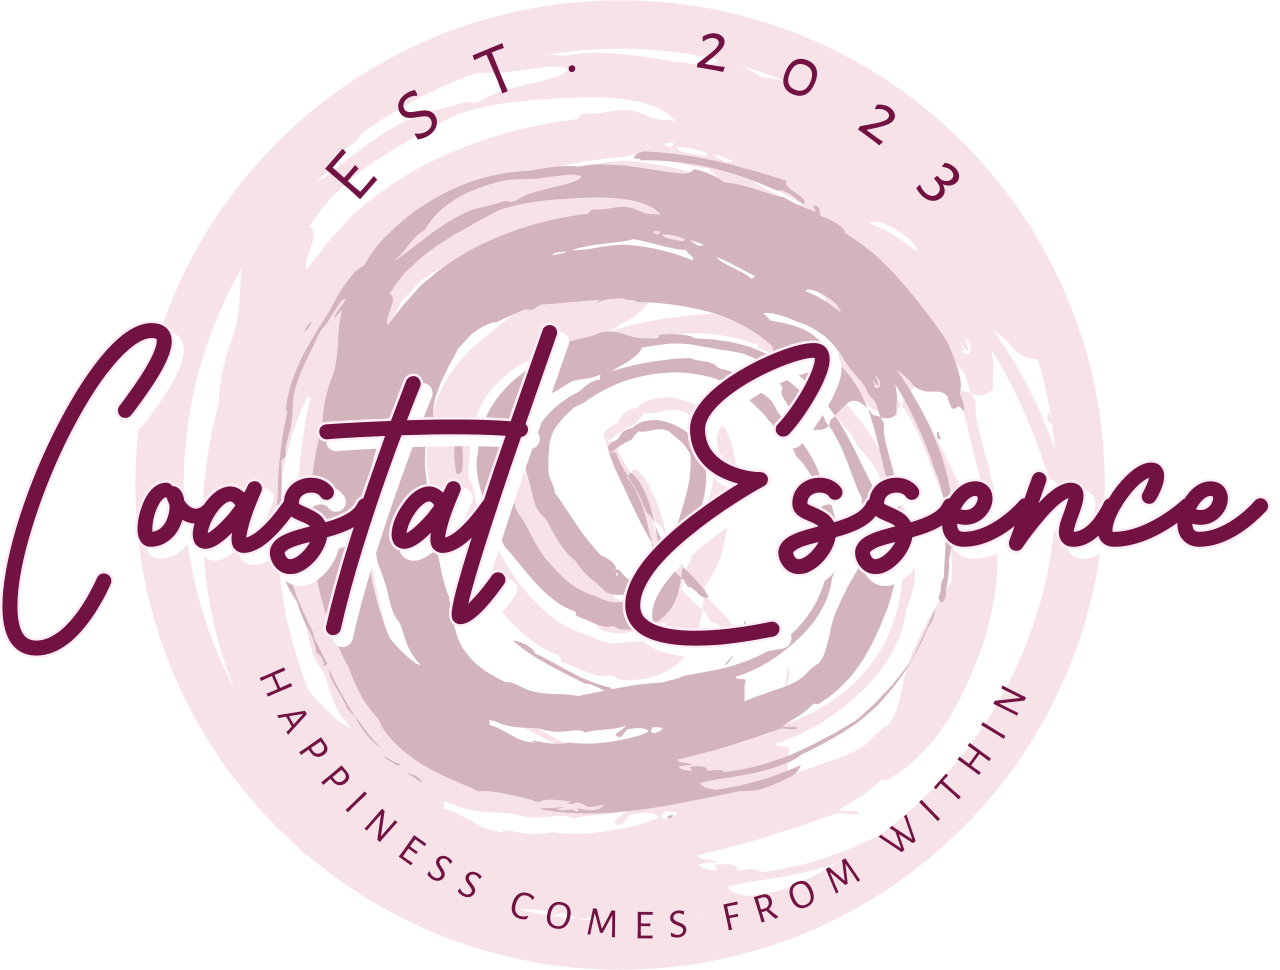 Coastal Essence's logo